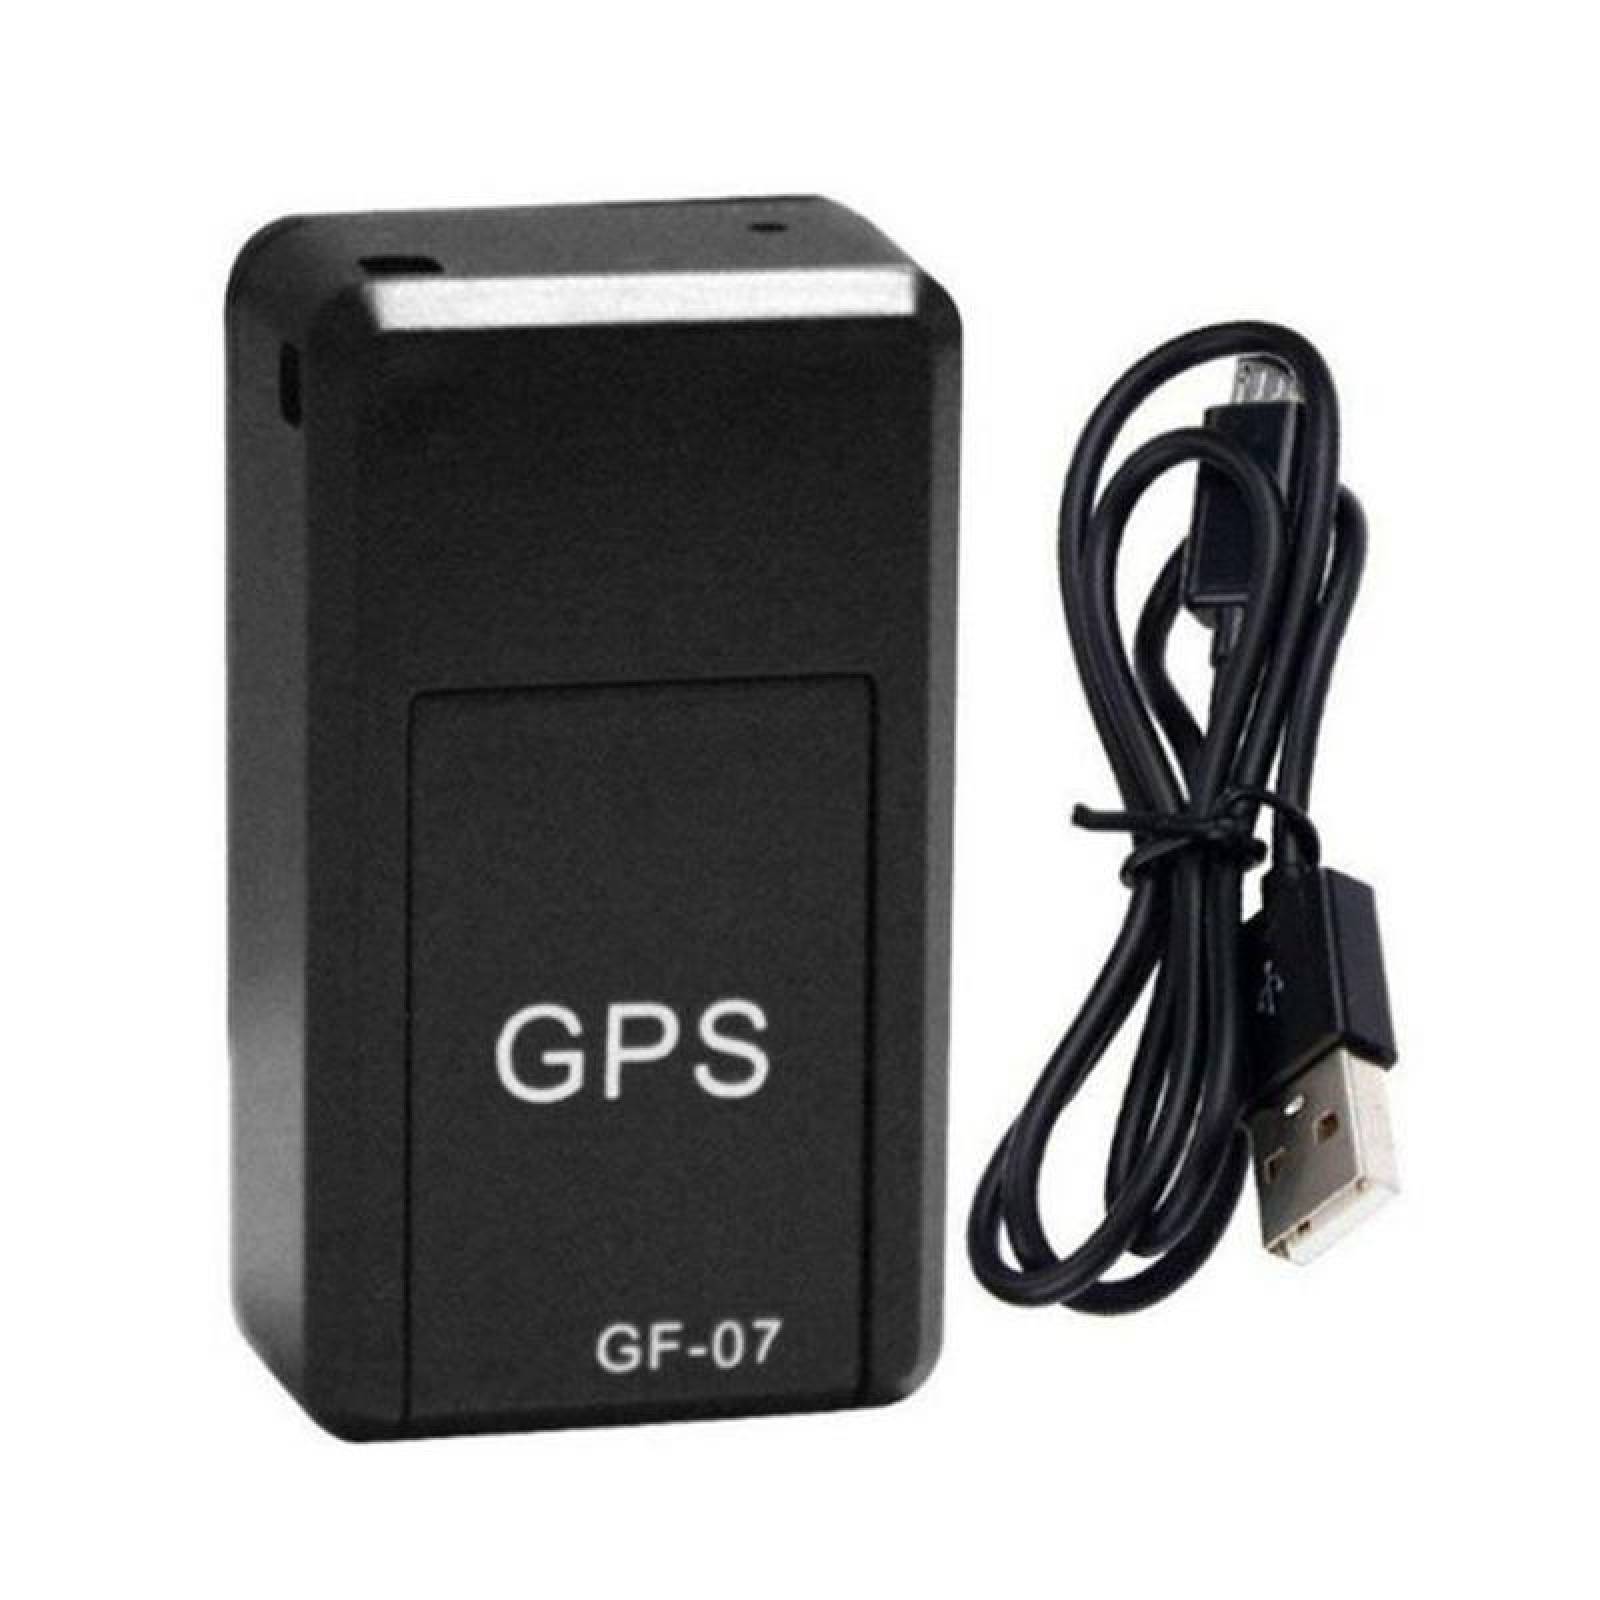 Mini GPS localizador Magnético MXGSM-001-6 1 Pza Alcance Global Batería  CR2032 Plástico Negro Rastreo Google Maps Tarjeta SIM No Incluida, GPSMini